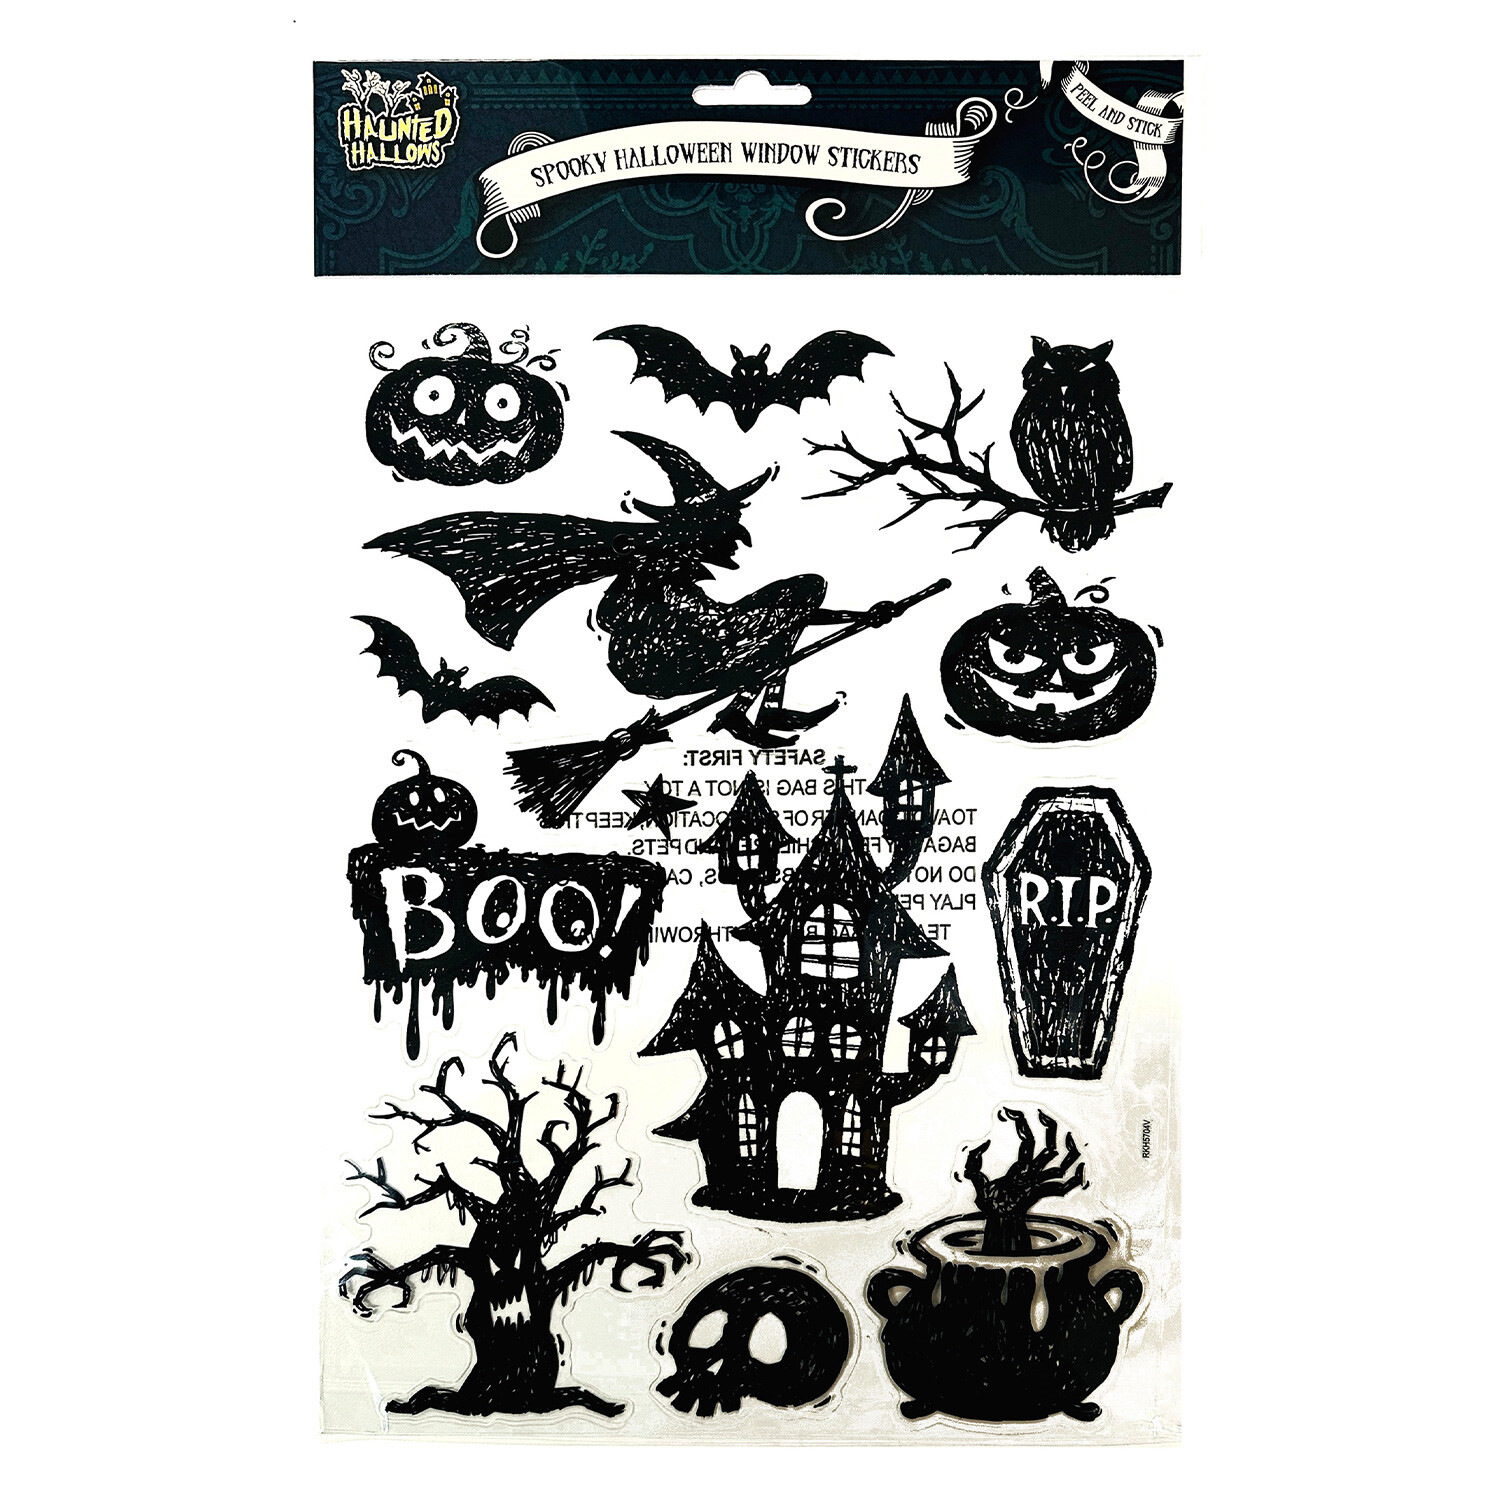 Haunted Hallows Spooky Halloween Window Stickers Image 1